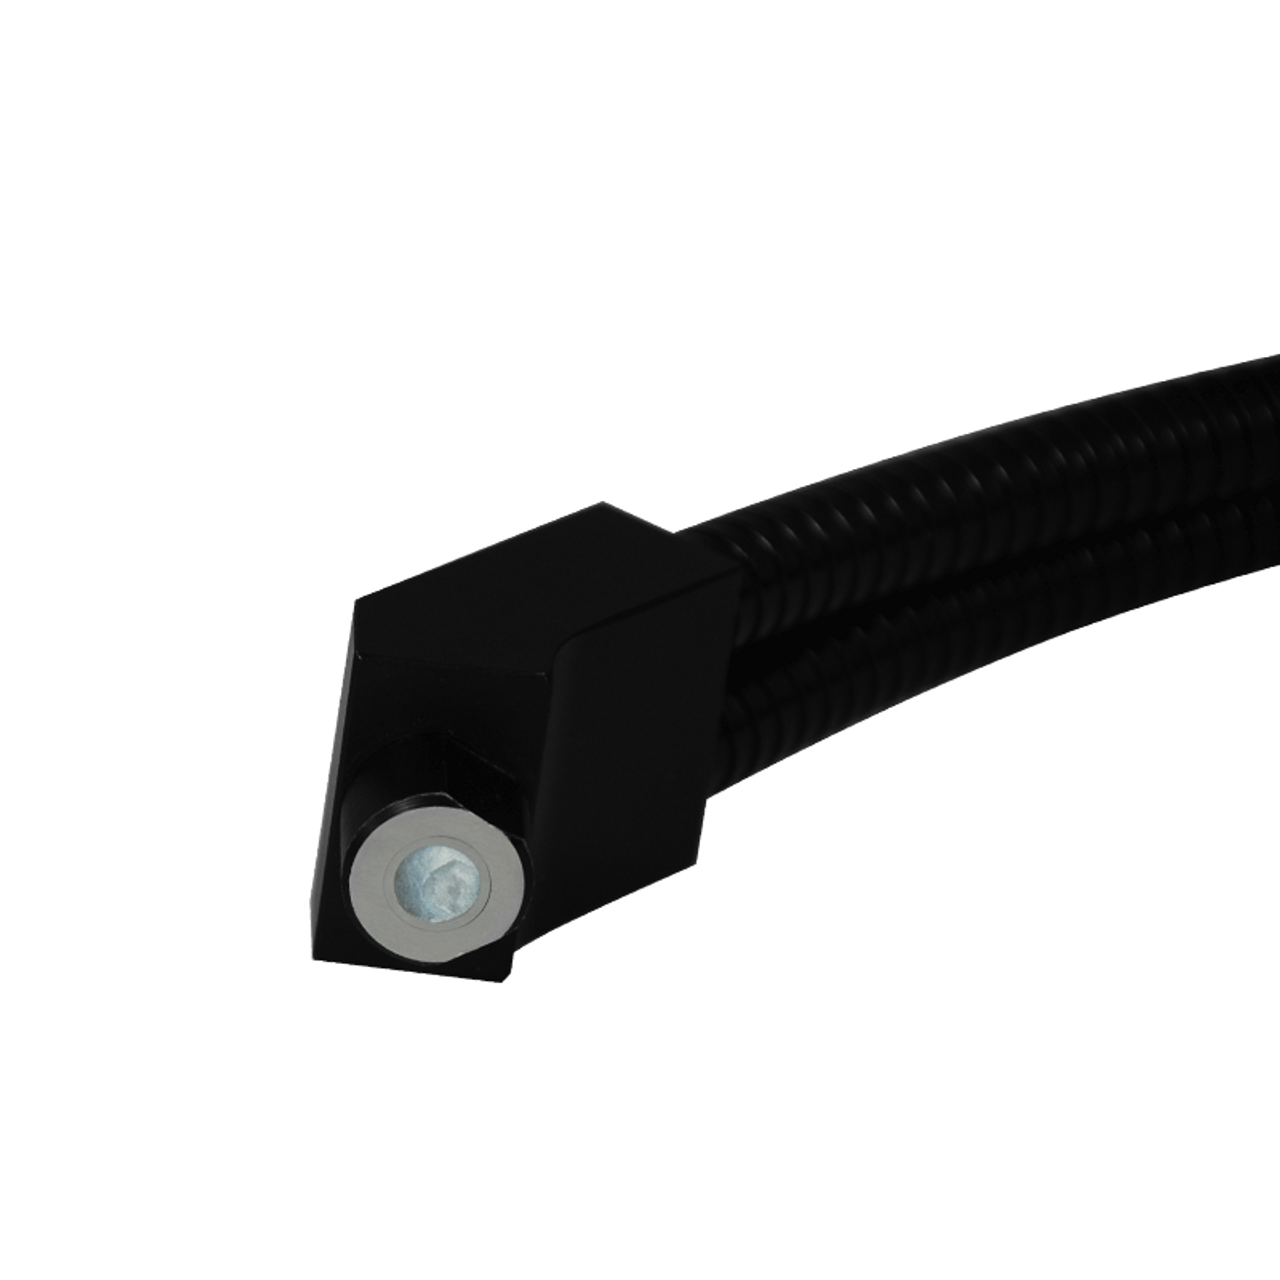 Dual Gooseneck Light Guide Cables for Microscope Fiber Optic